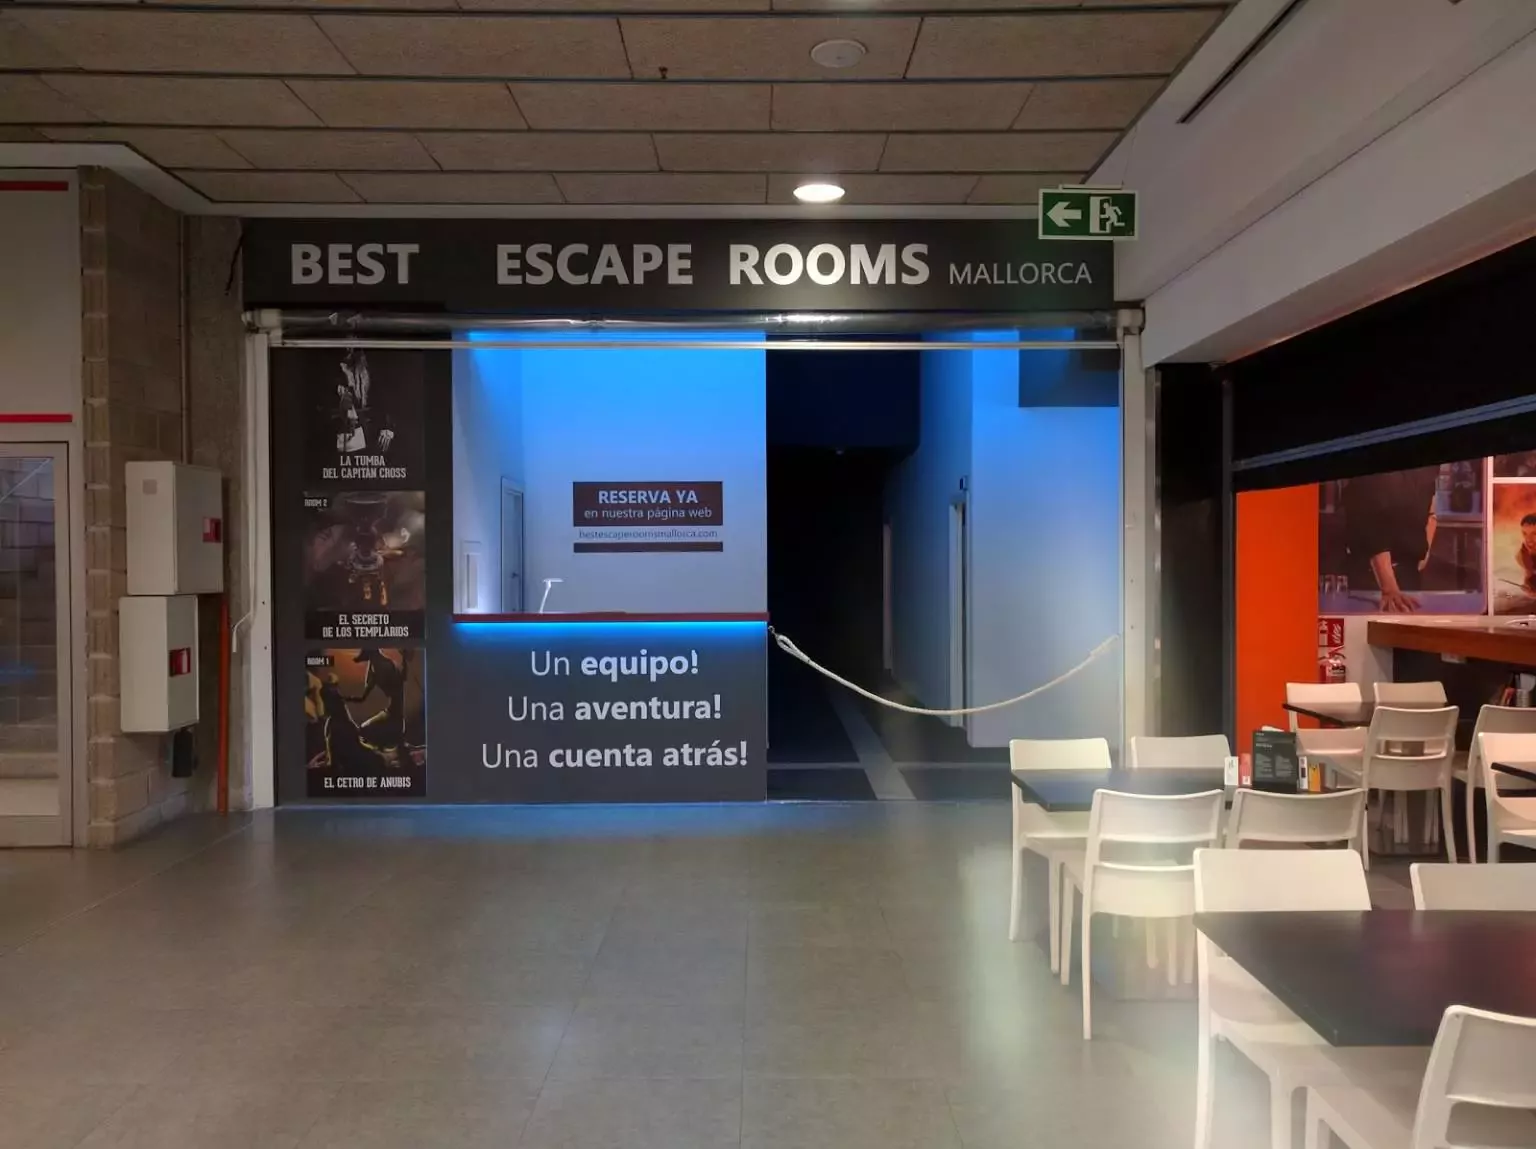 3. Best Escape Rooms Mallorca